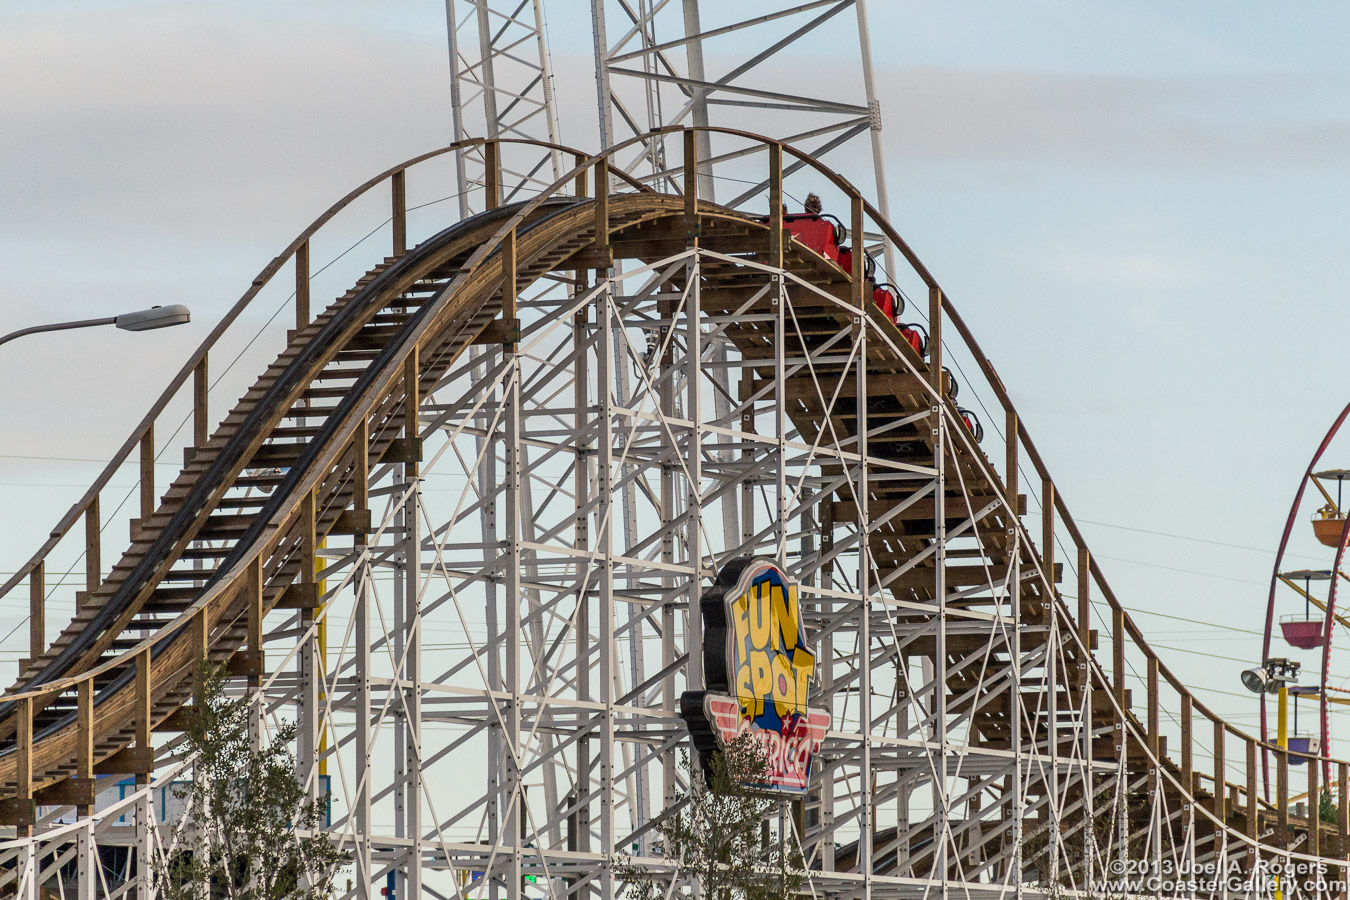 White Lightning wooden roller coaster at Fun Spot America